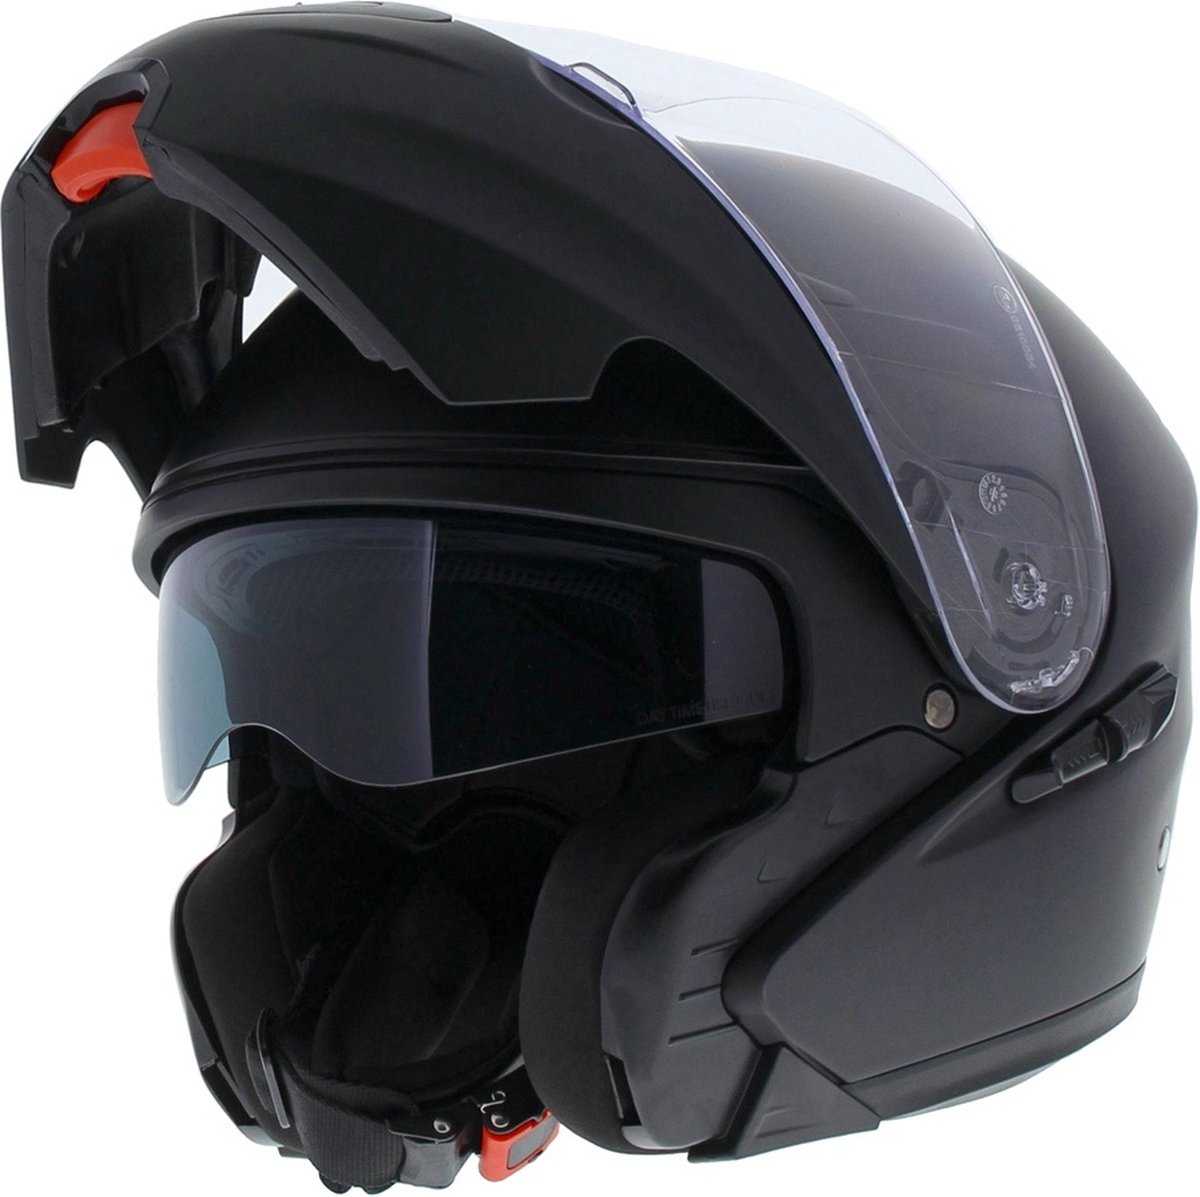 Motor / Scooter Helm - Vito Lanzetti - Systeemhelm - Mat zwart - S